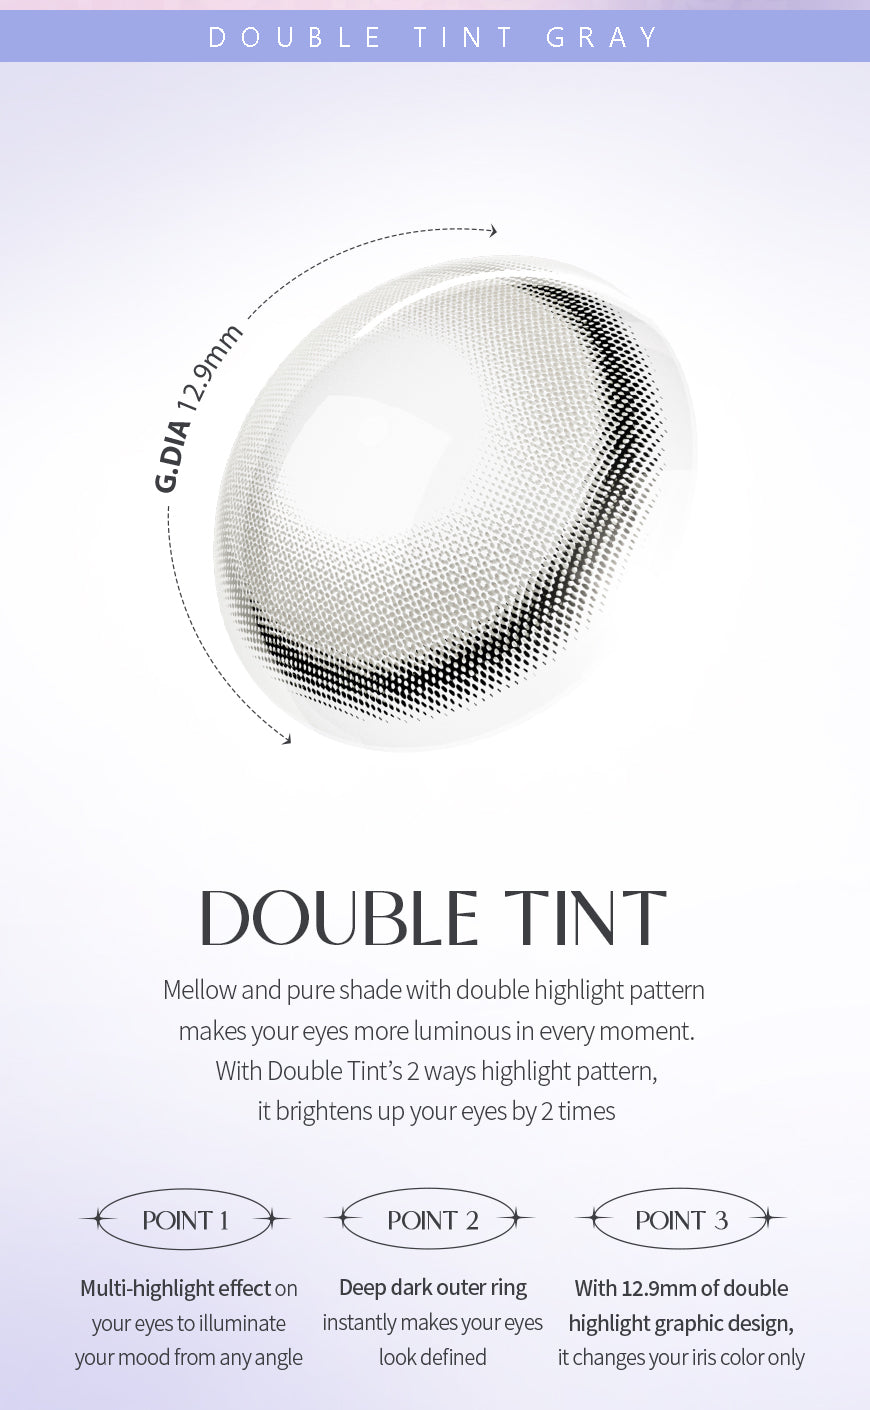 O-Lens Double Tint Gray | Daily 10 Pairs